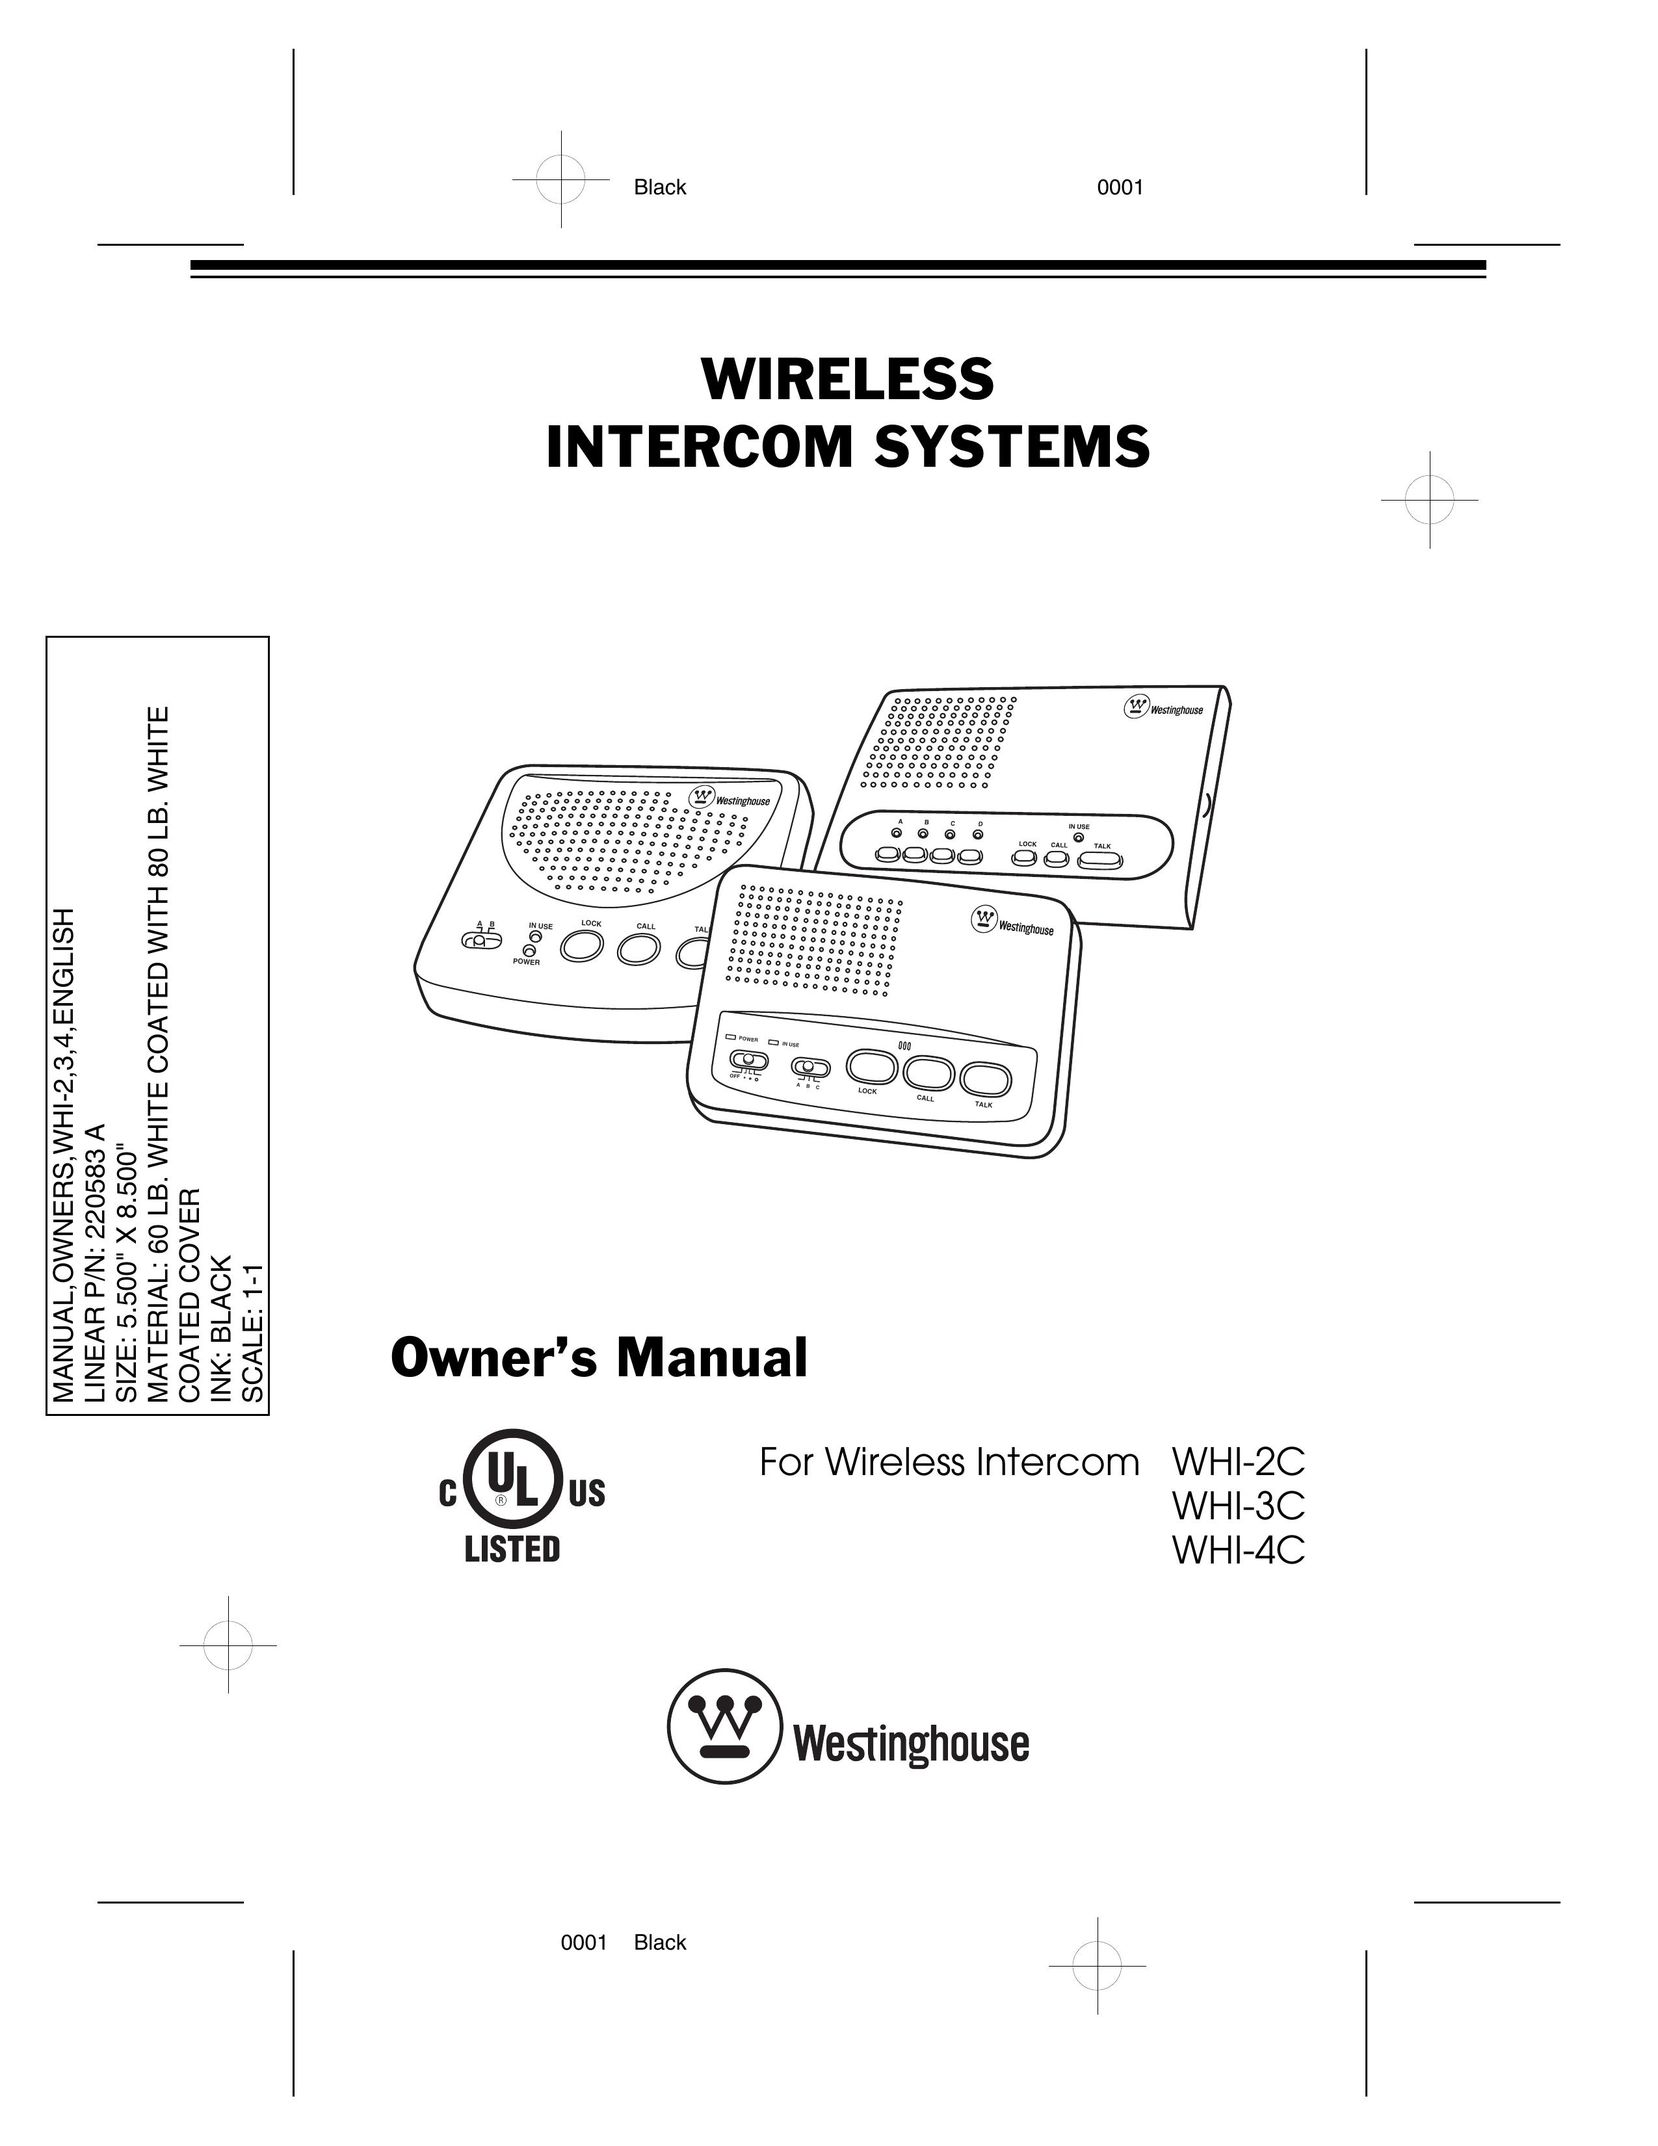 Westinghouse WHI-3C Intercom System User Manual